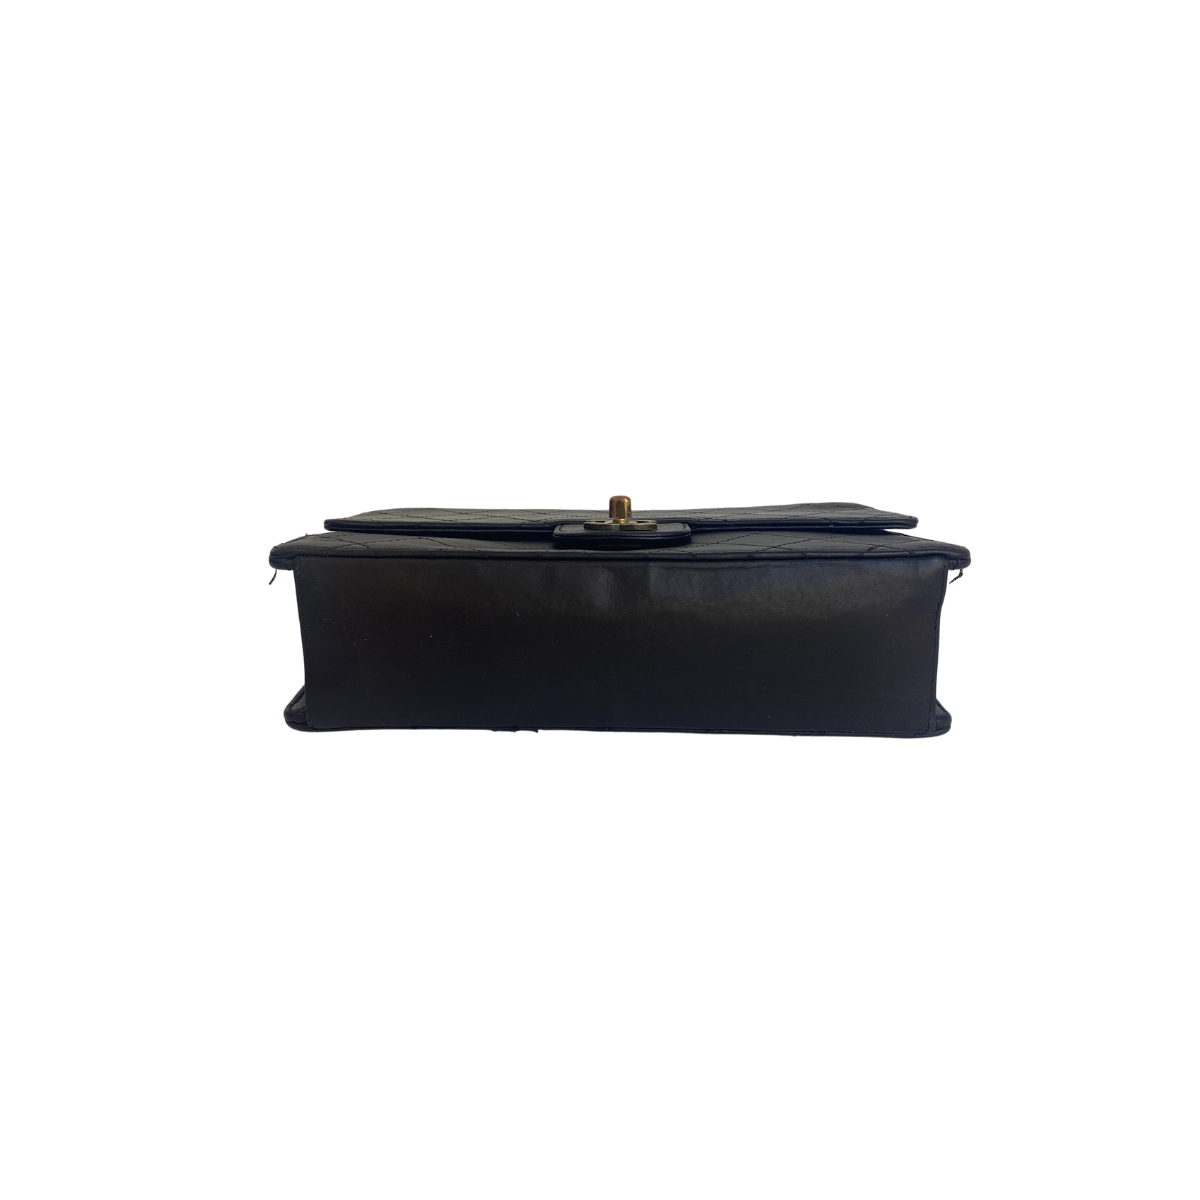 Chanel Classic Single Flap Bag Medium Lambskin Leather (Limited